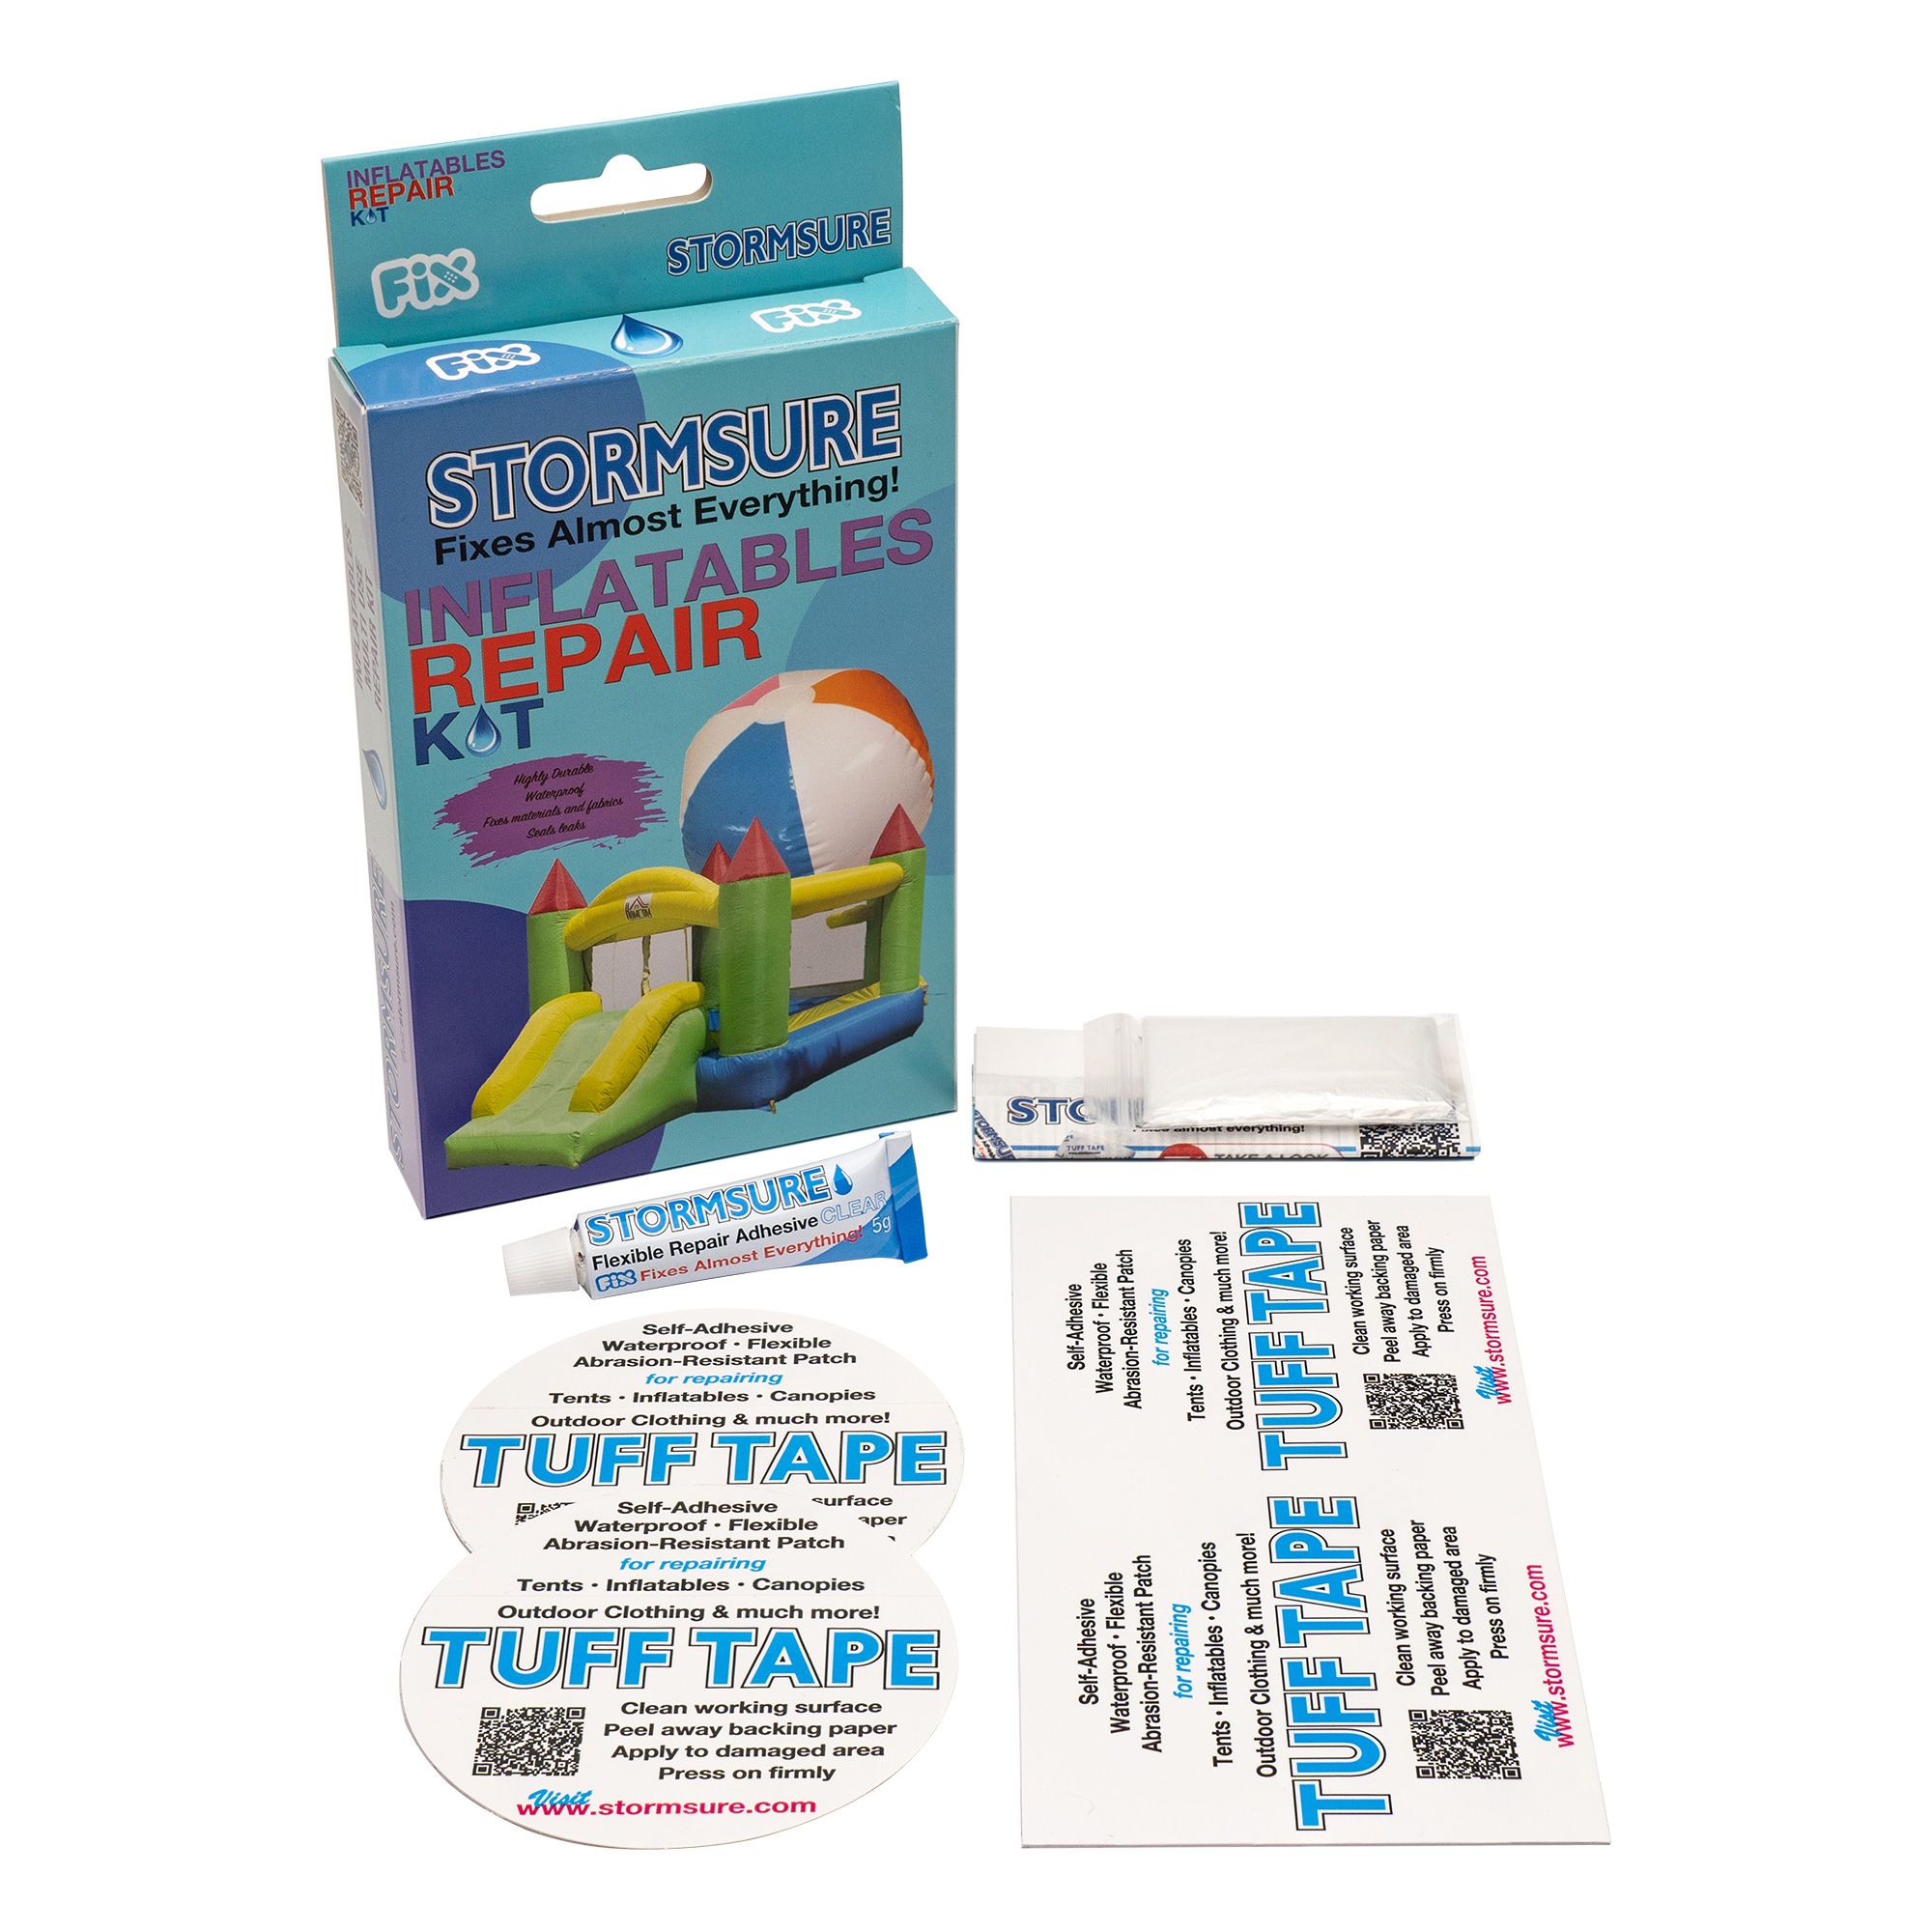 Stormsure Toy Inflatables Repair Kit